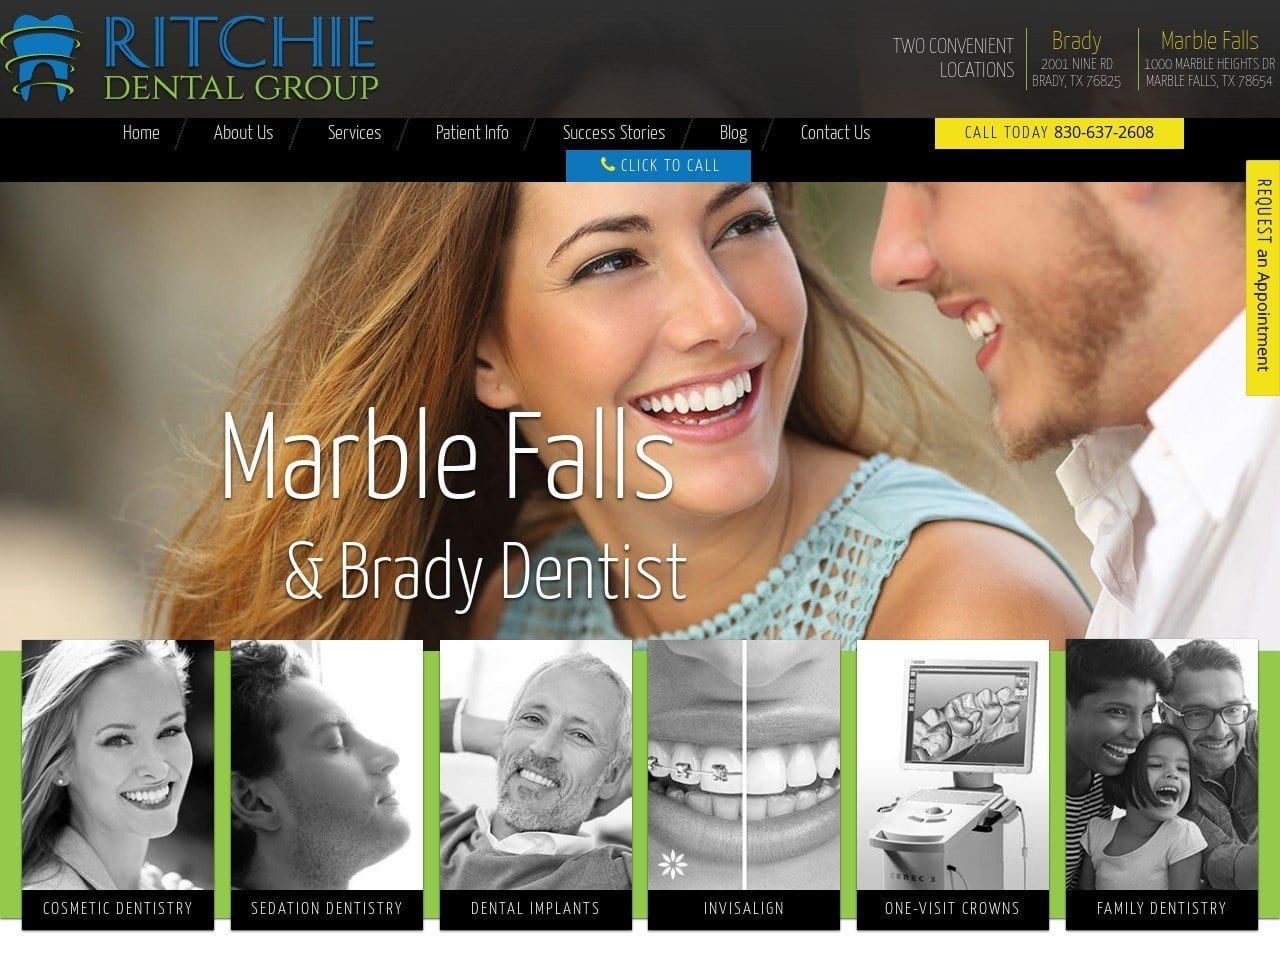 Ritchie Dental Group Website Screenshot from ritchiedentalgroup.com